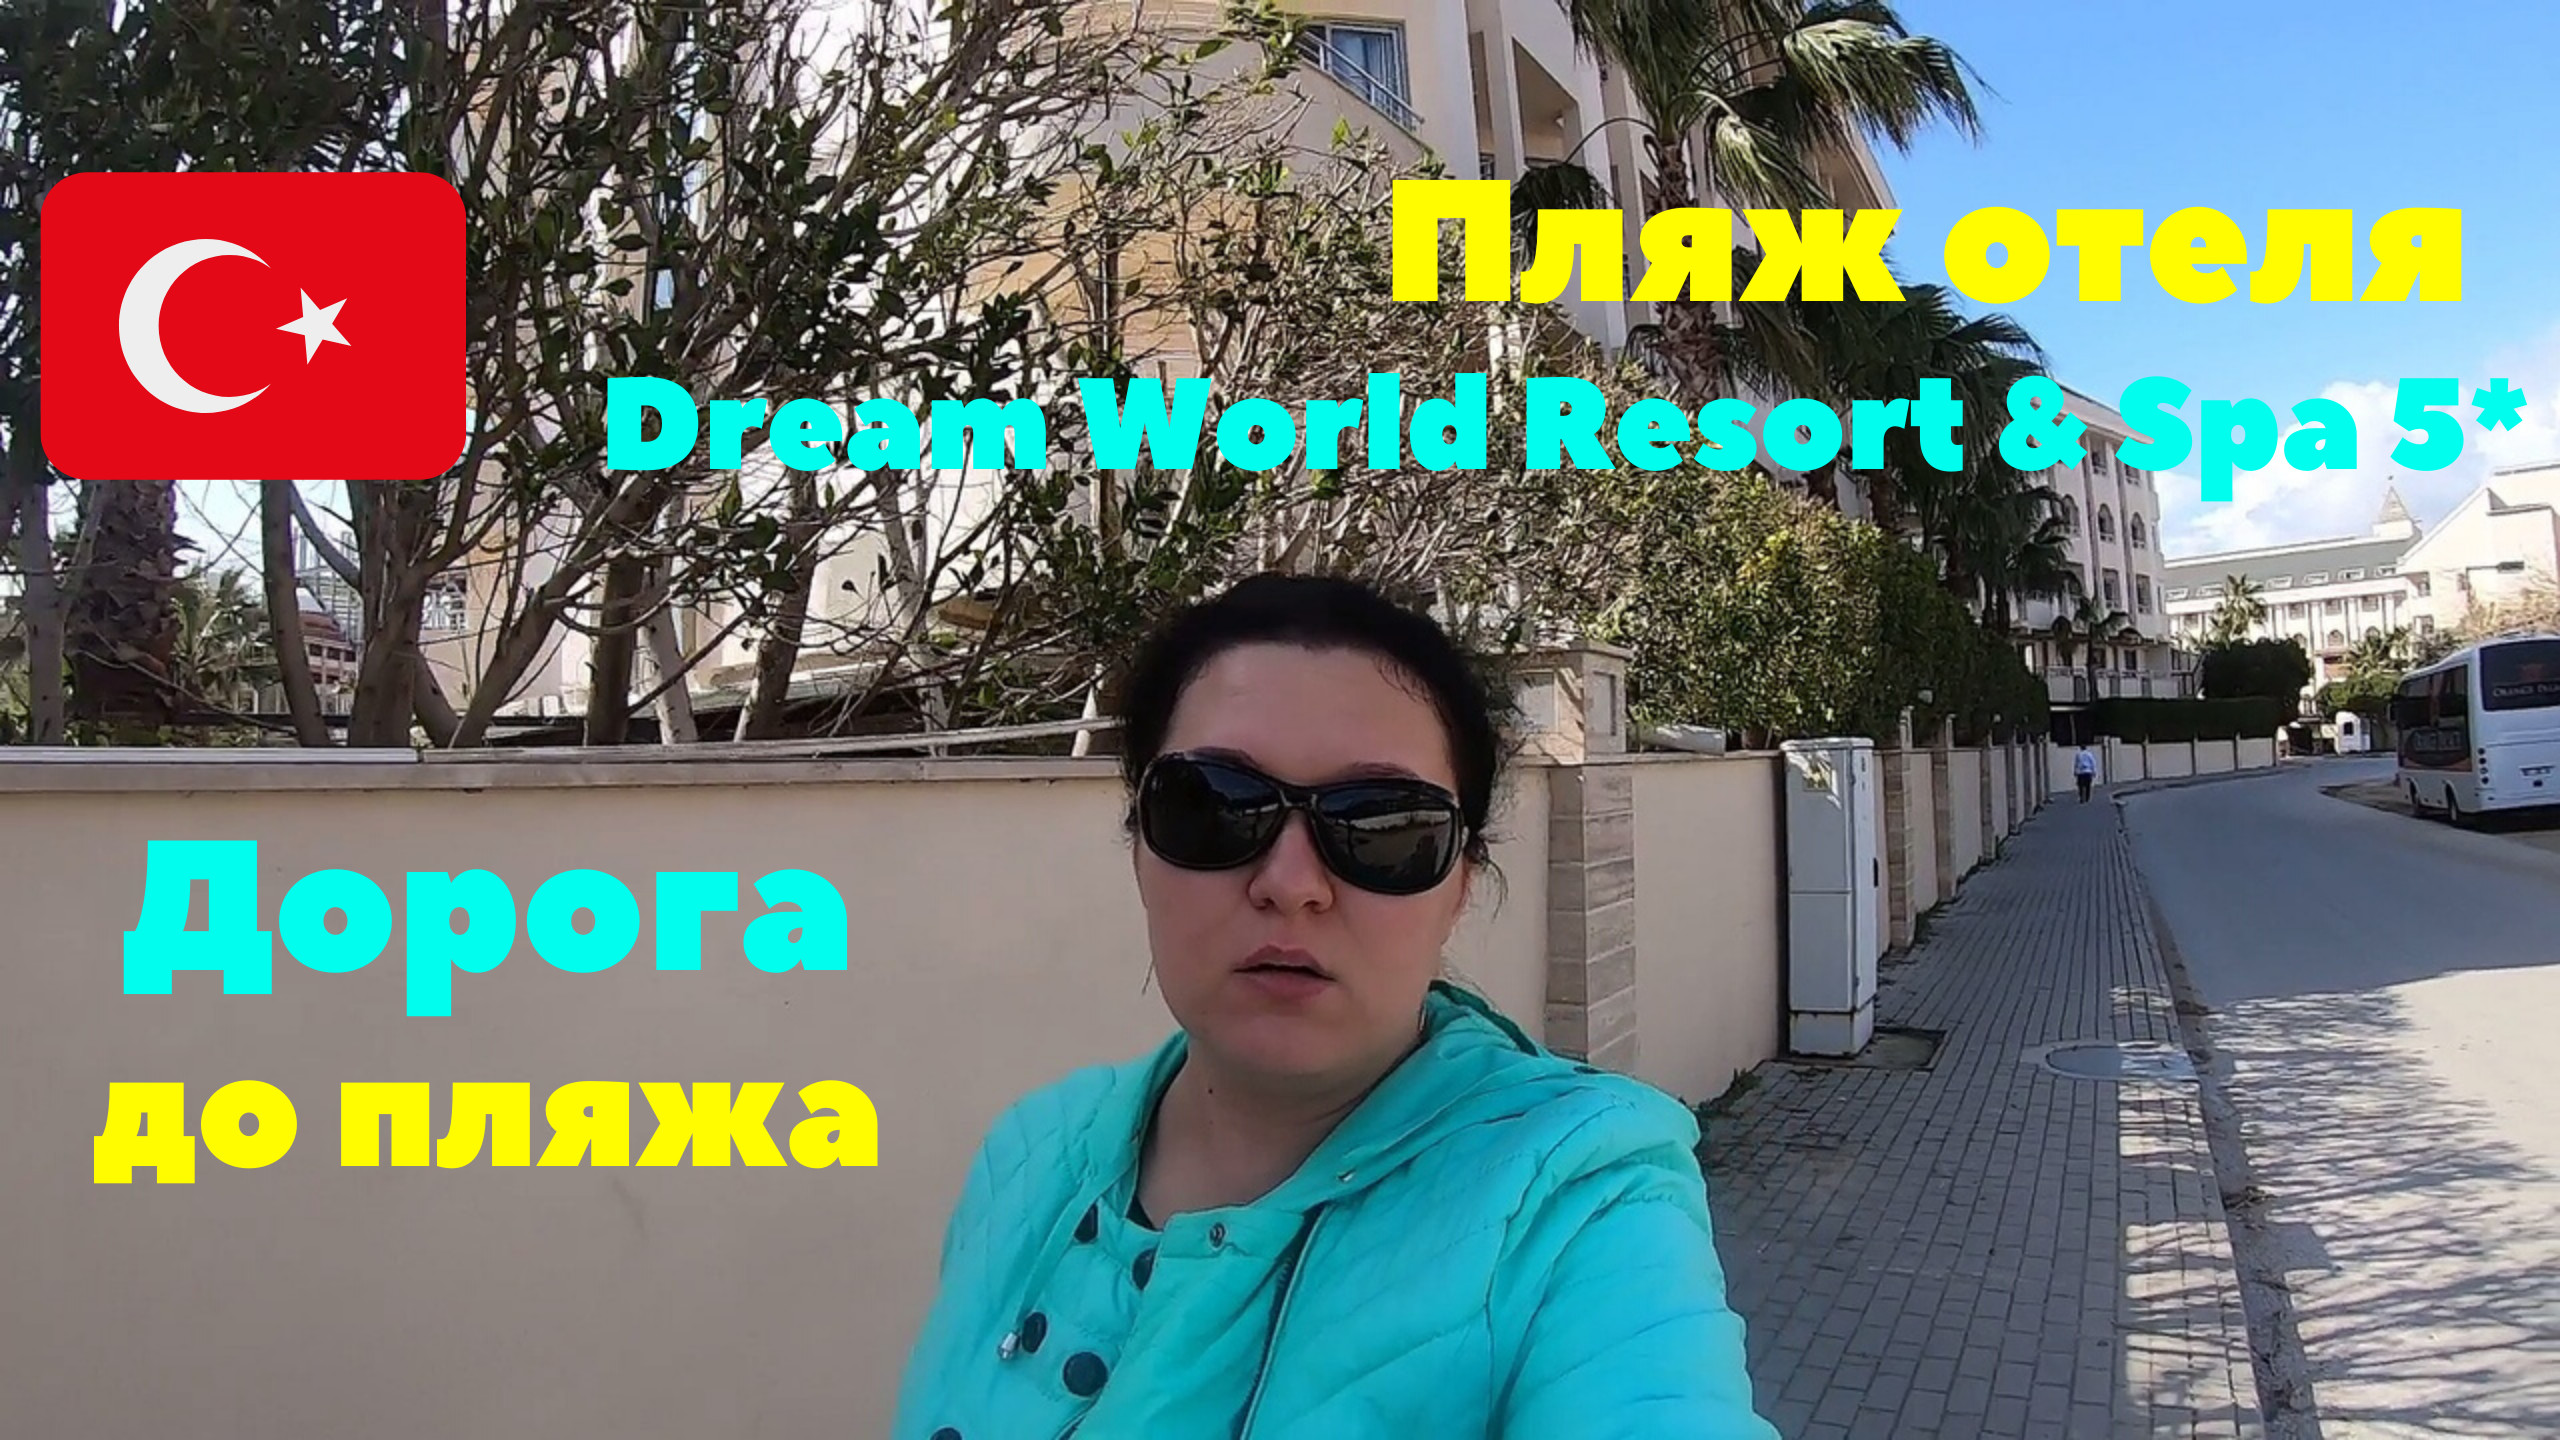 Дорога до пляжа. Пляж отеля Dream World Resort & Spa 5*. Турция 2020